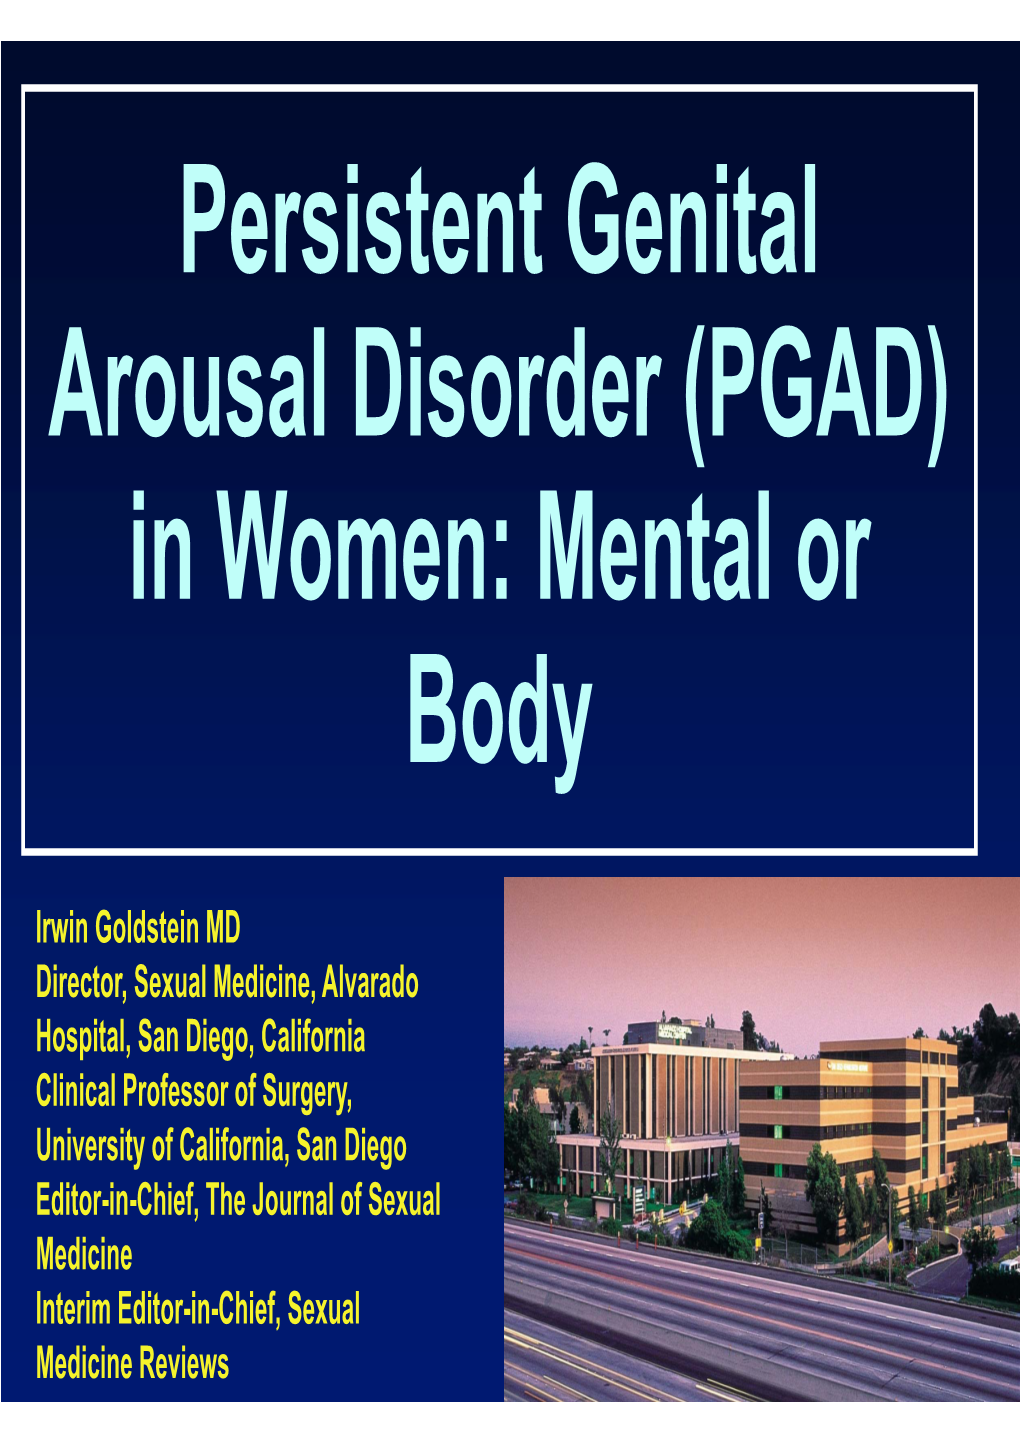 Persistent Genital Arousal Disorder (PGAD) in Women: Mental Or Body